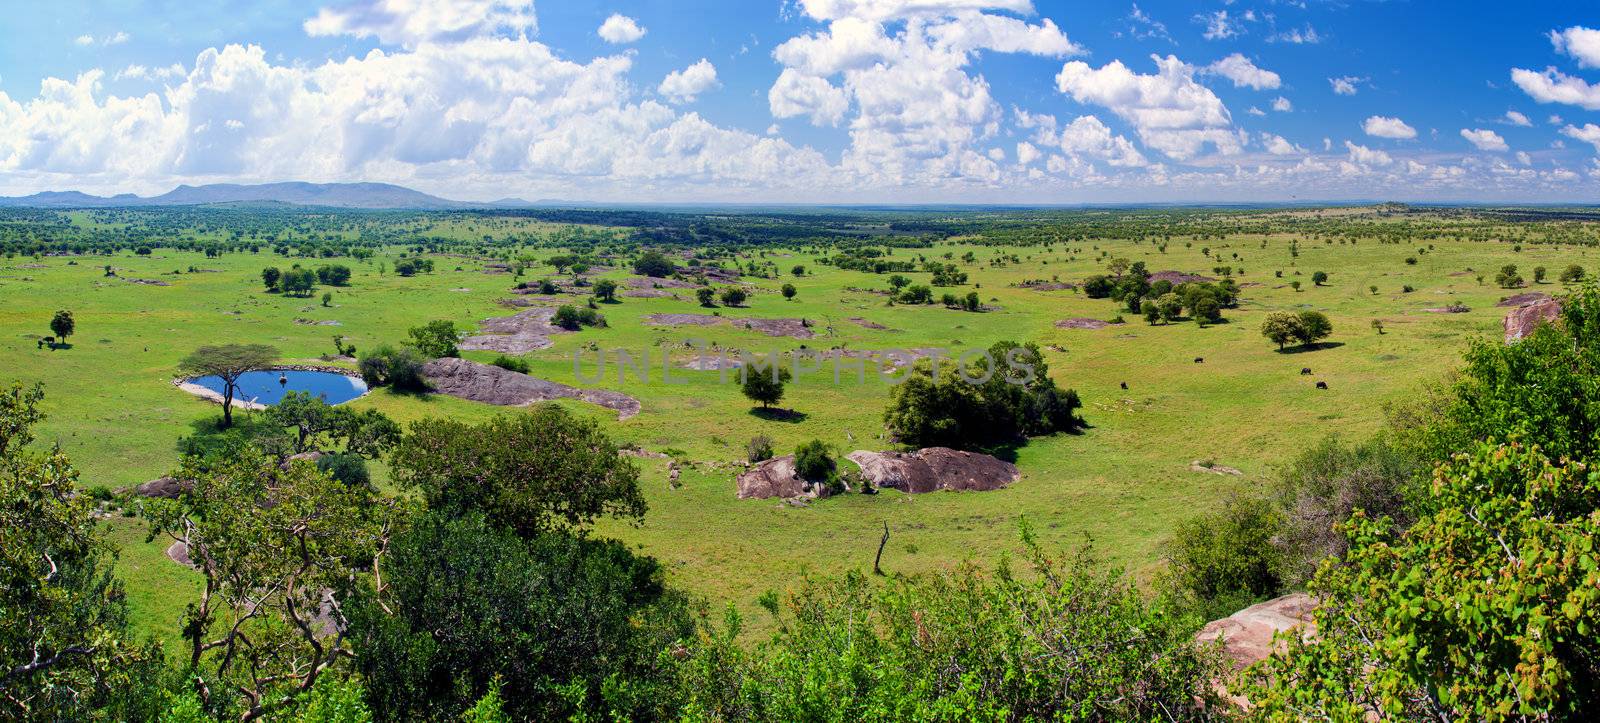 Savanna landscape in Serengeti, Tanzania, Africa by photocreo